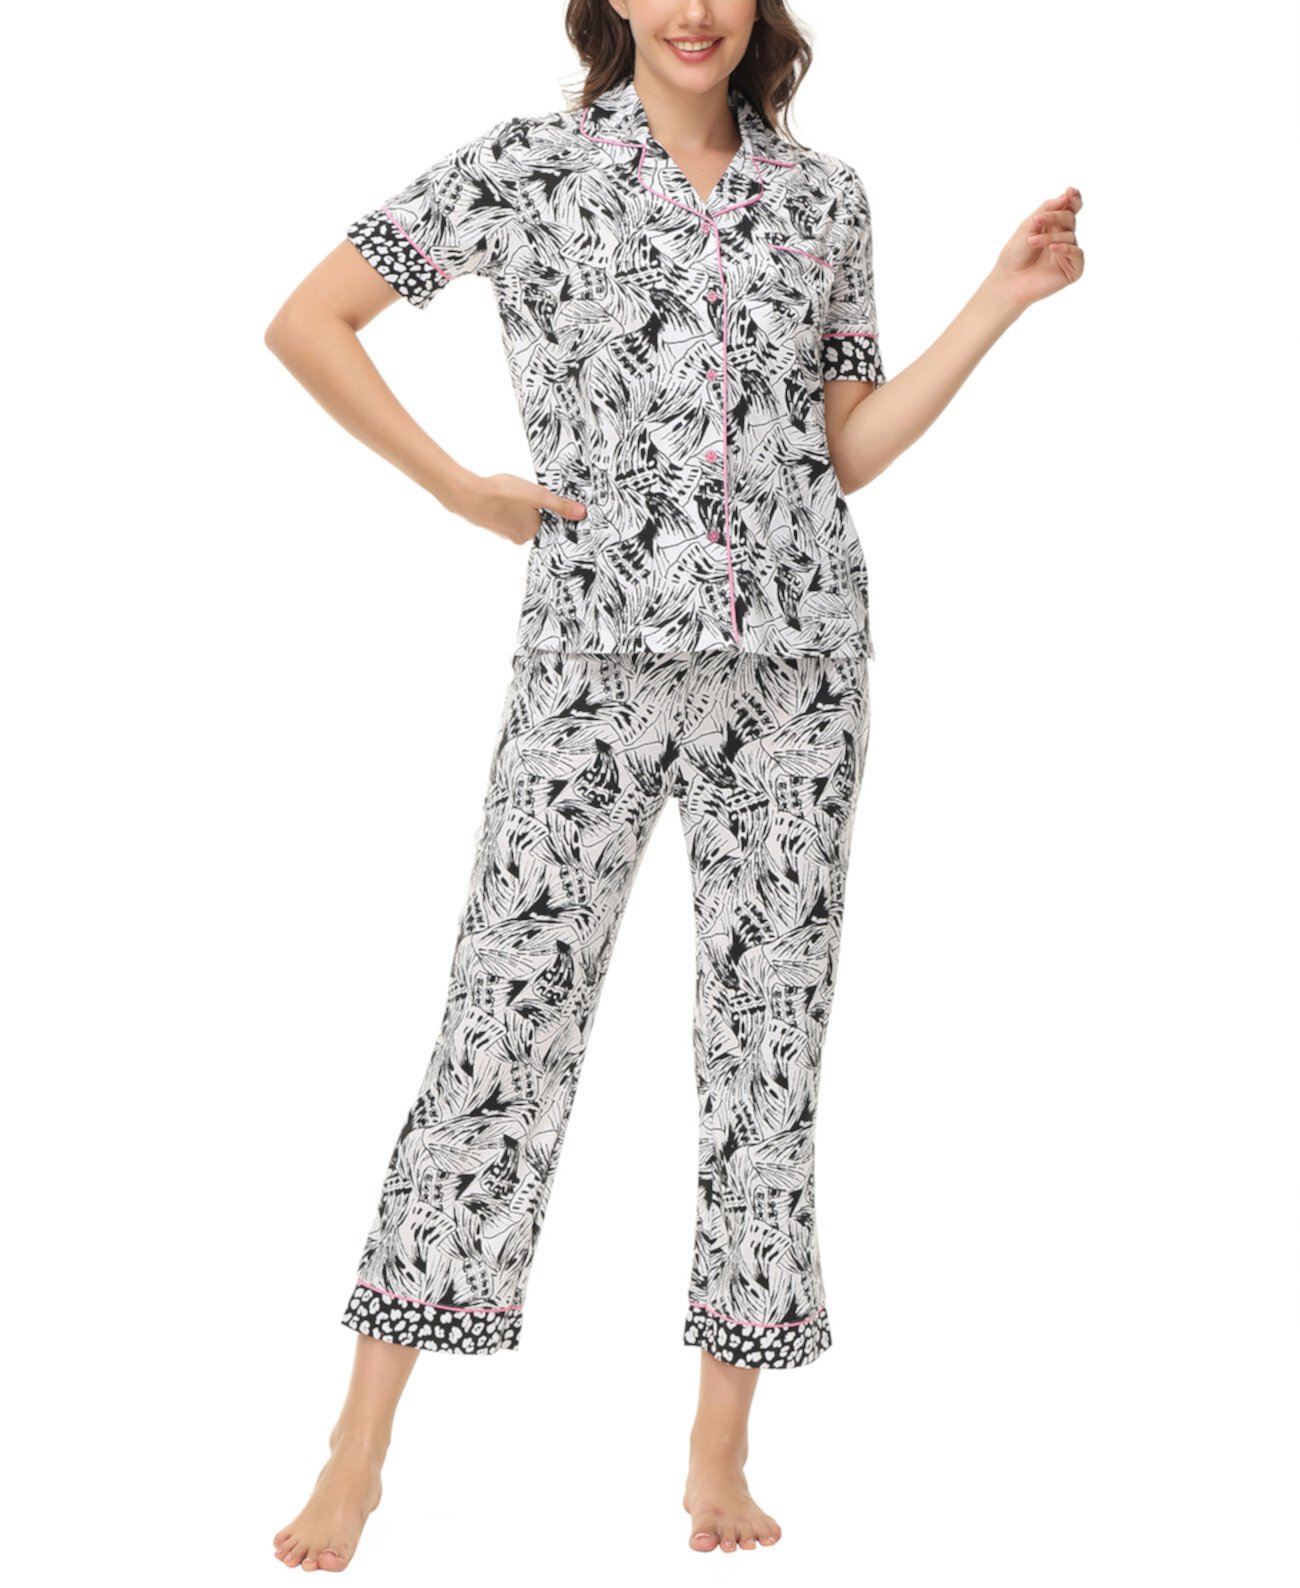 Women's Printed Short Sleeve Notch Collar with Pants 2 Pc. Pajama Set C. Wonder